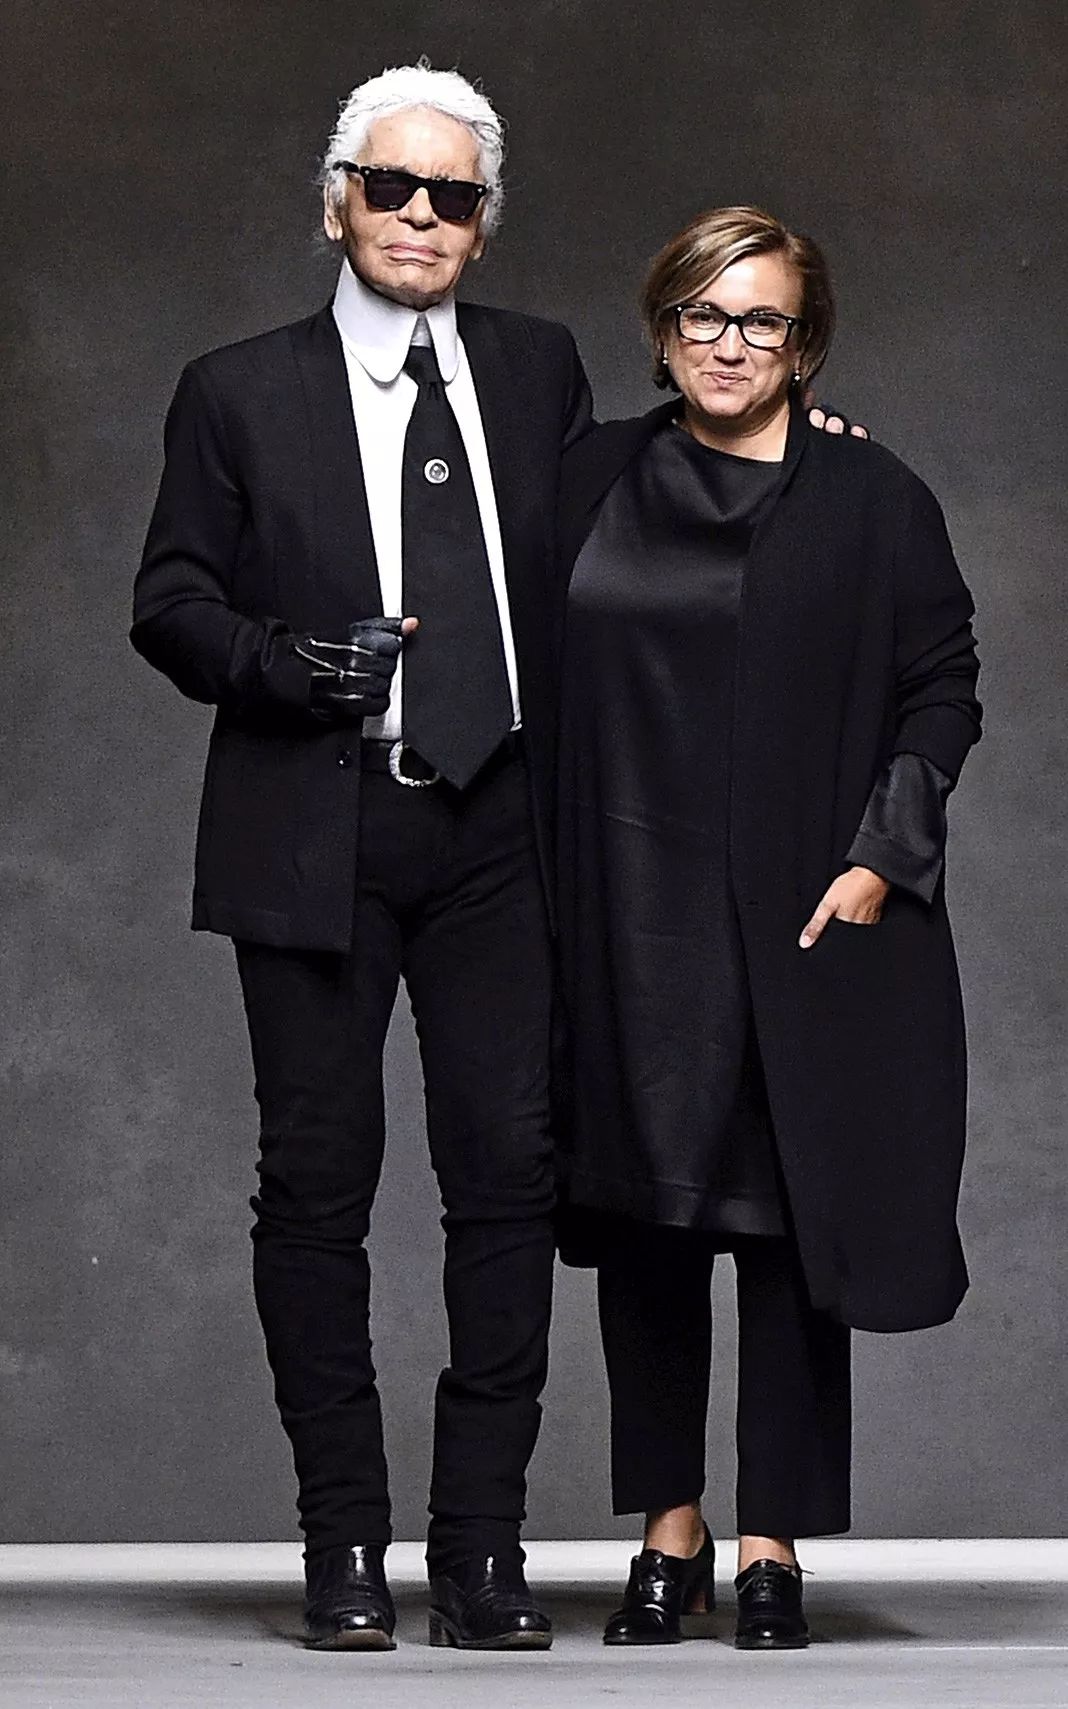 Карл Лагерфельд, Сильвия Вентурини-Фенди на шоу Fendi на Миланской Неделе моды Осень/Зима 2016, 24 сентября 2015 г.